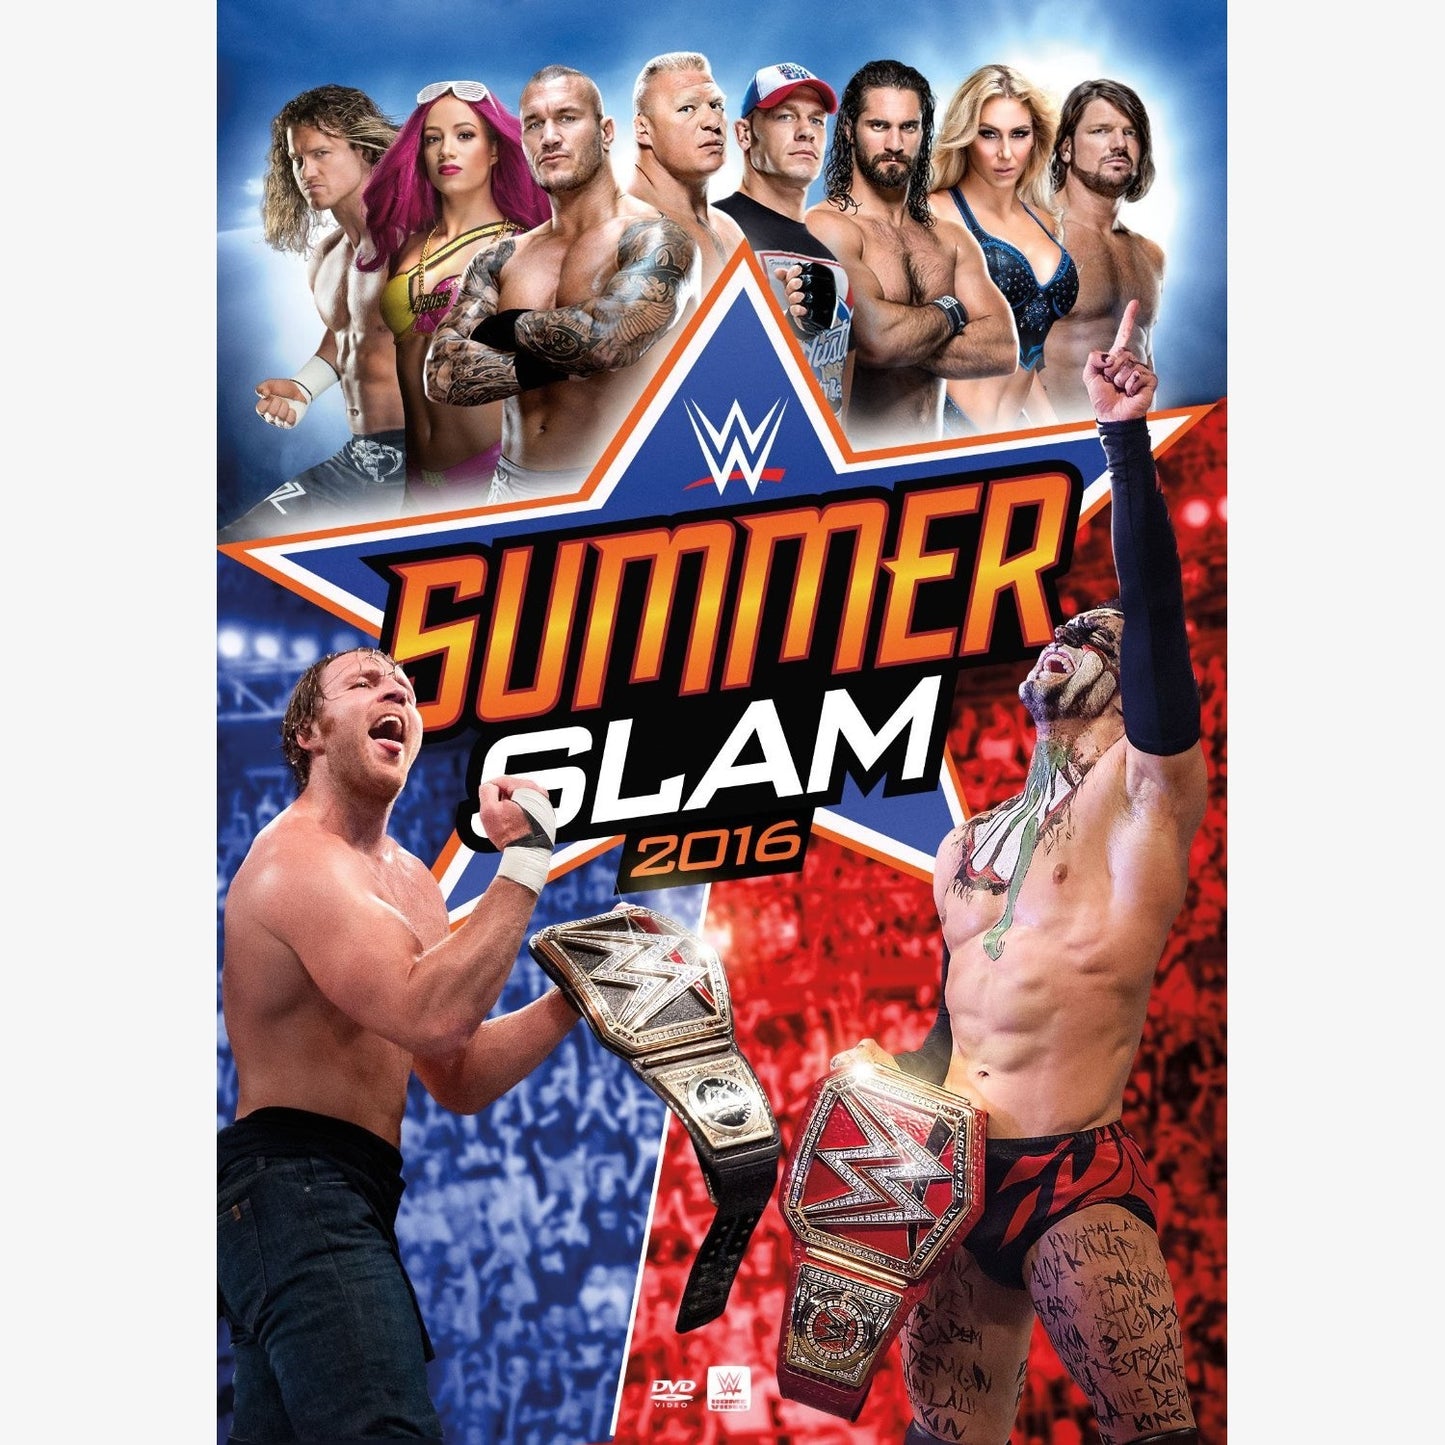 WWE SummerSlam 2016 Blu-ray